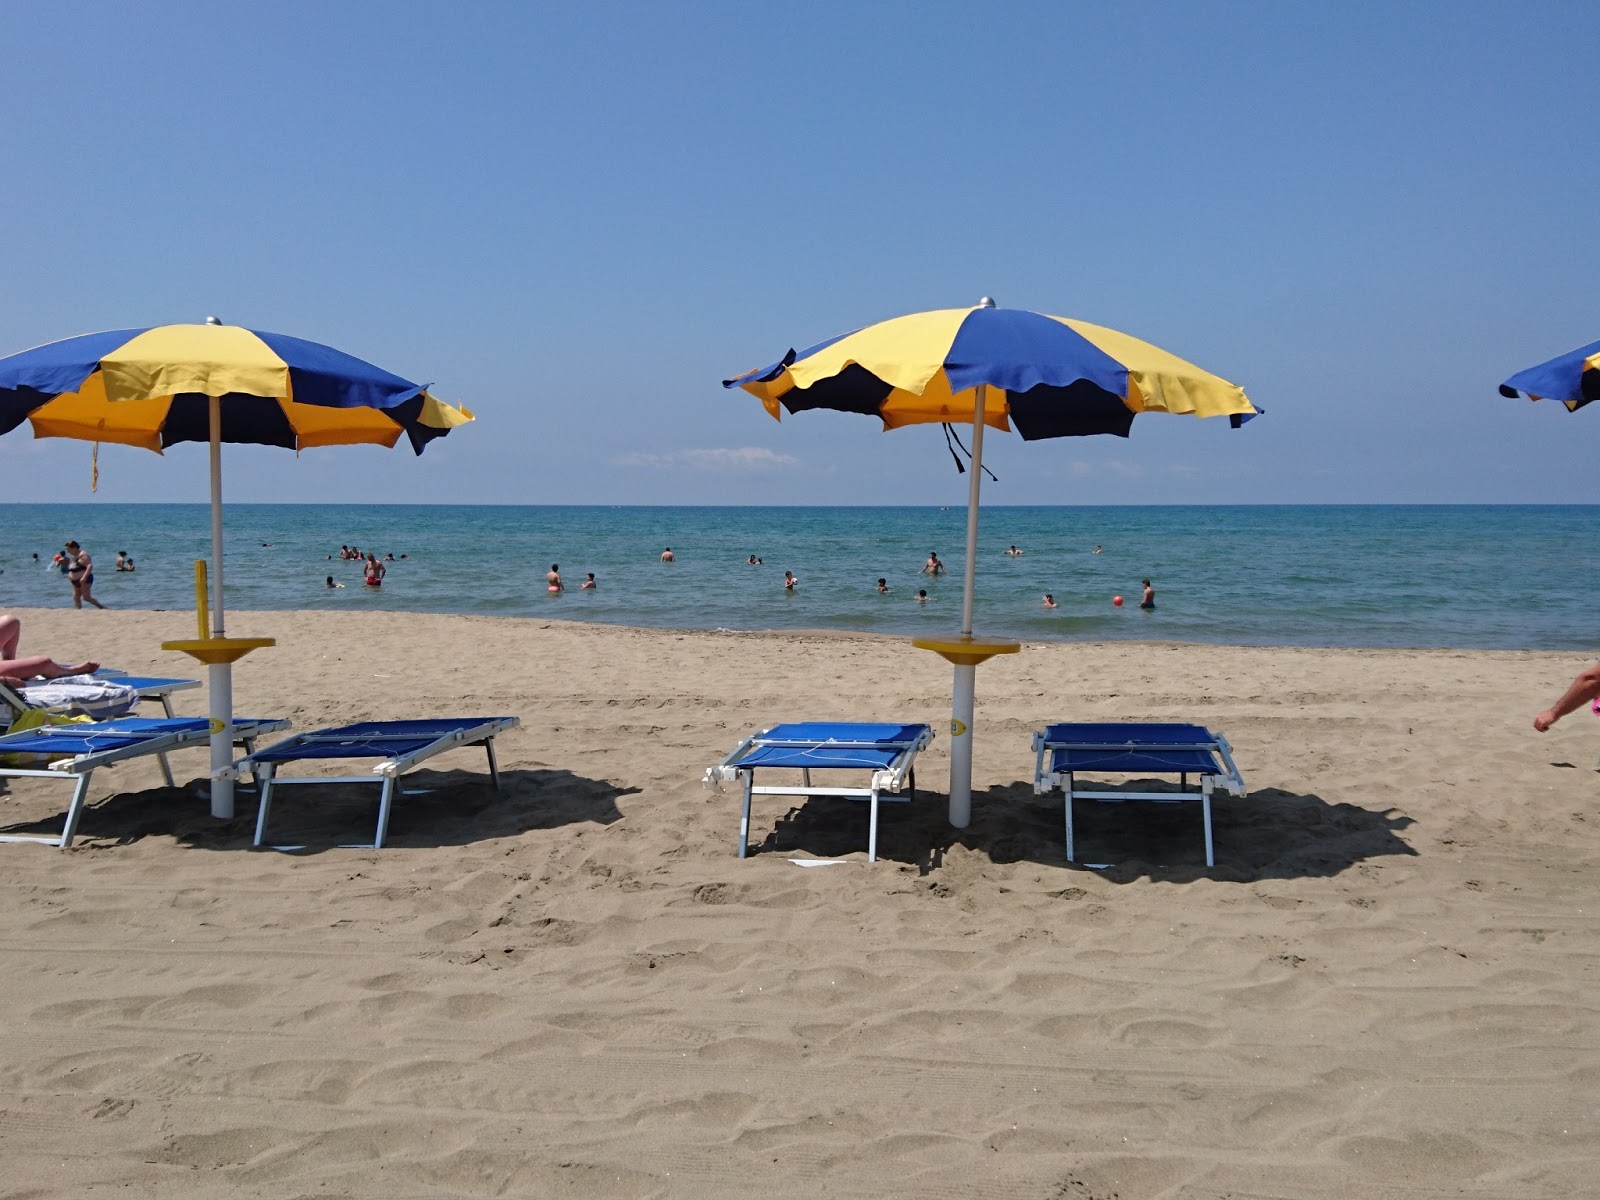 Foto de Praia de Le Vagnole - lugar popular entre os apreciadores de relaxamento